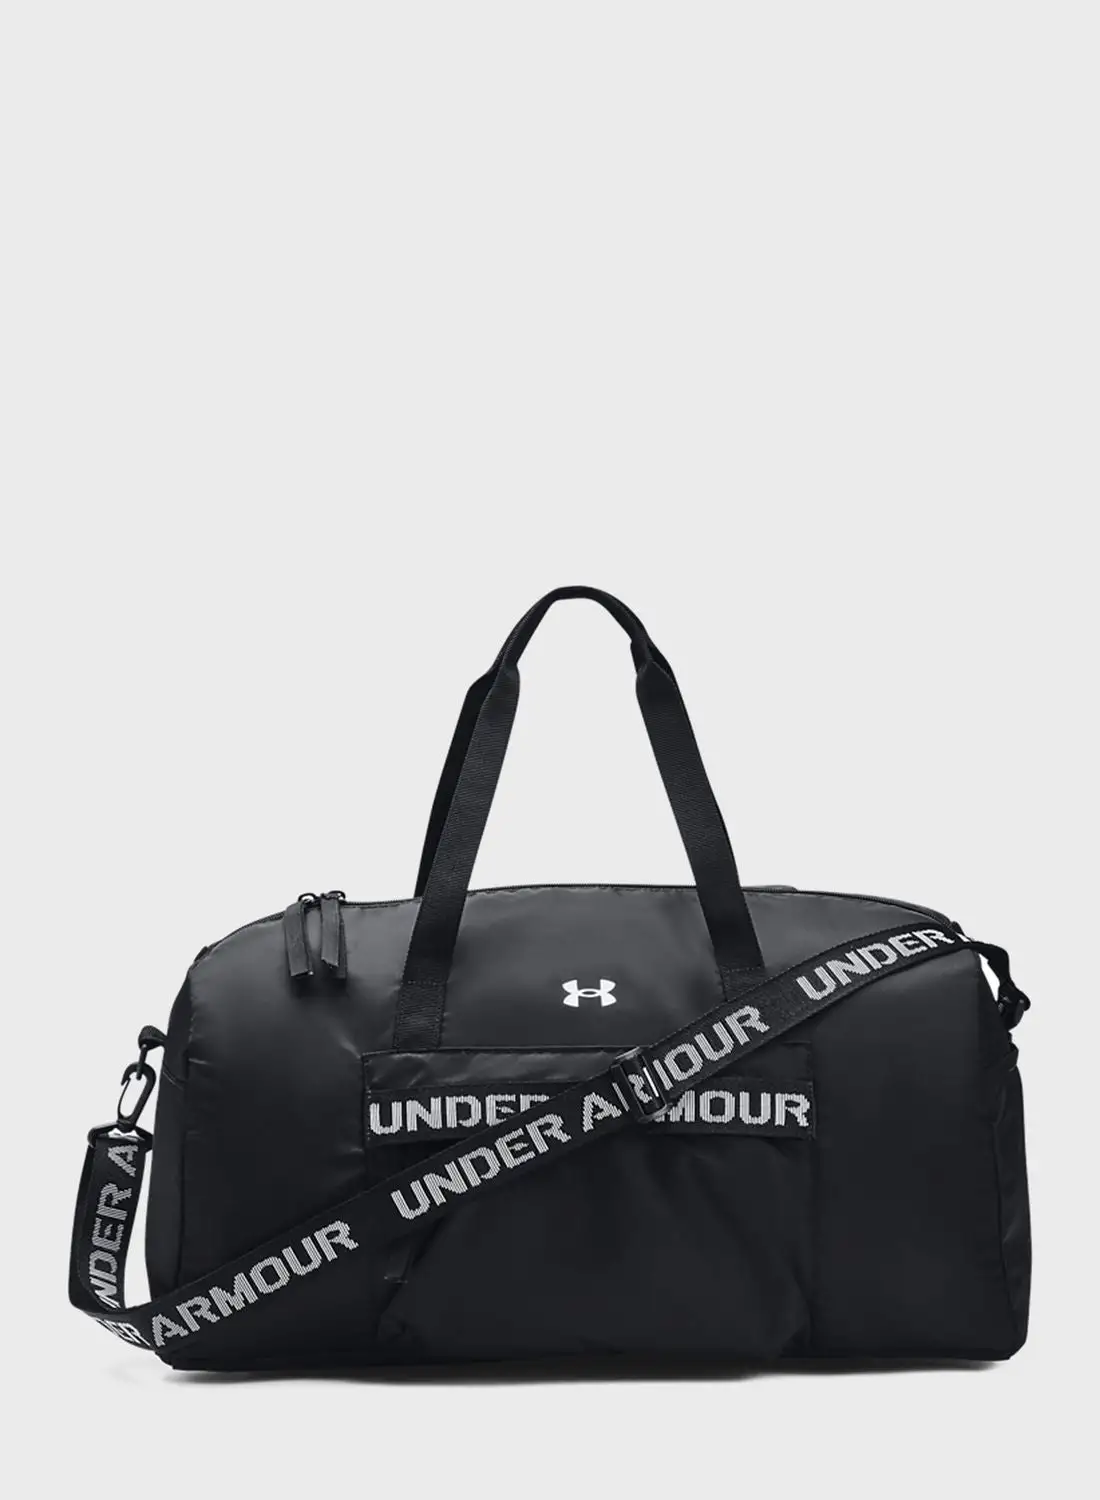 UNDER ARMOUR Favorite Duffle Bag